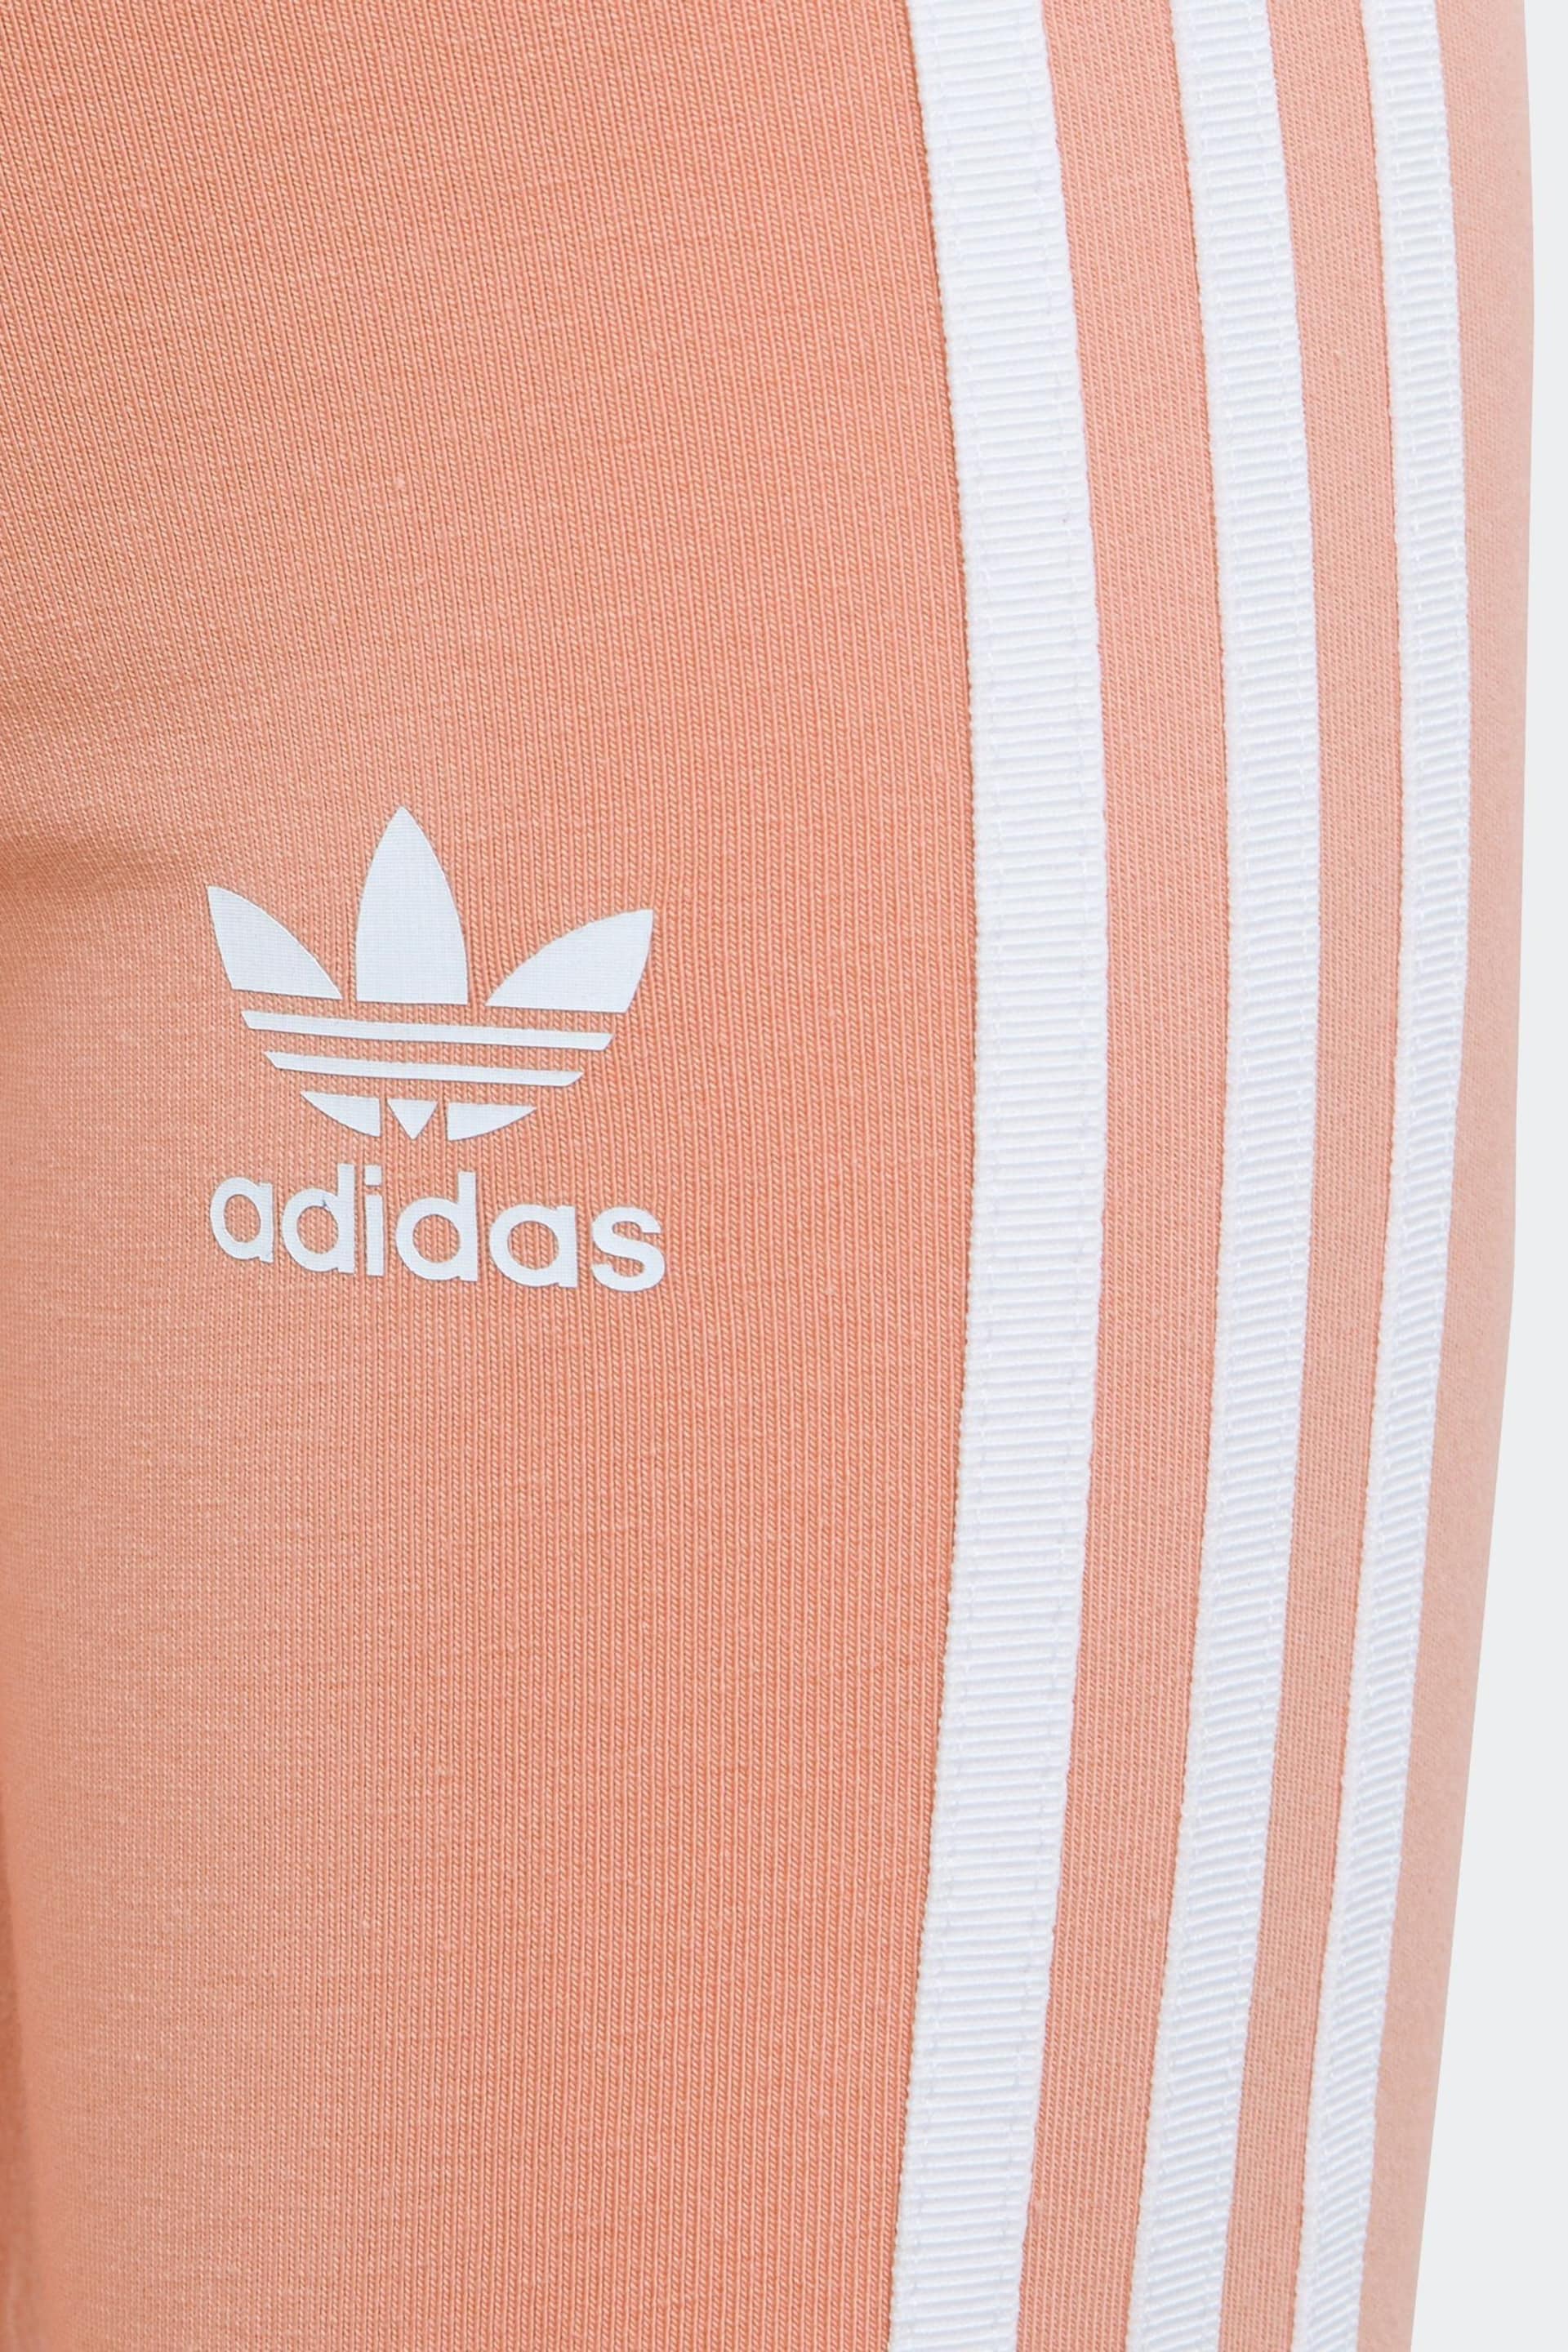 adidas Originals Kids Pink Sweatshirt & Joggers Set - Image 6 of 6